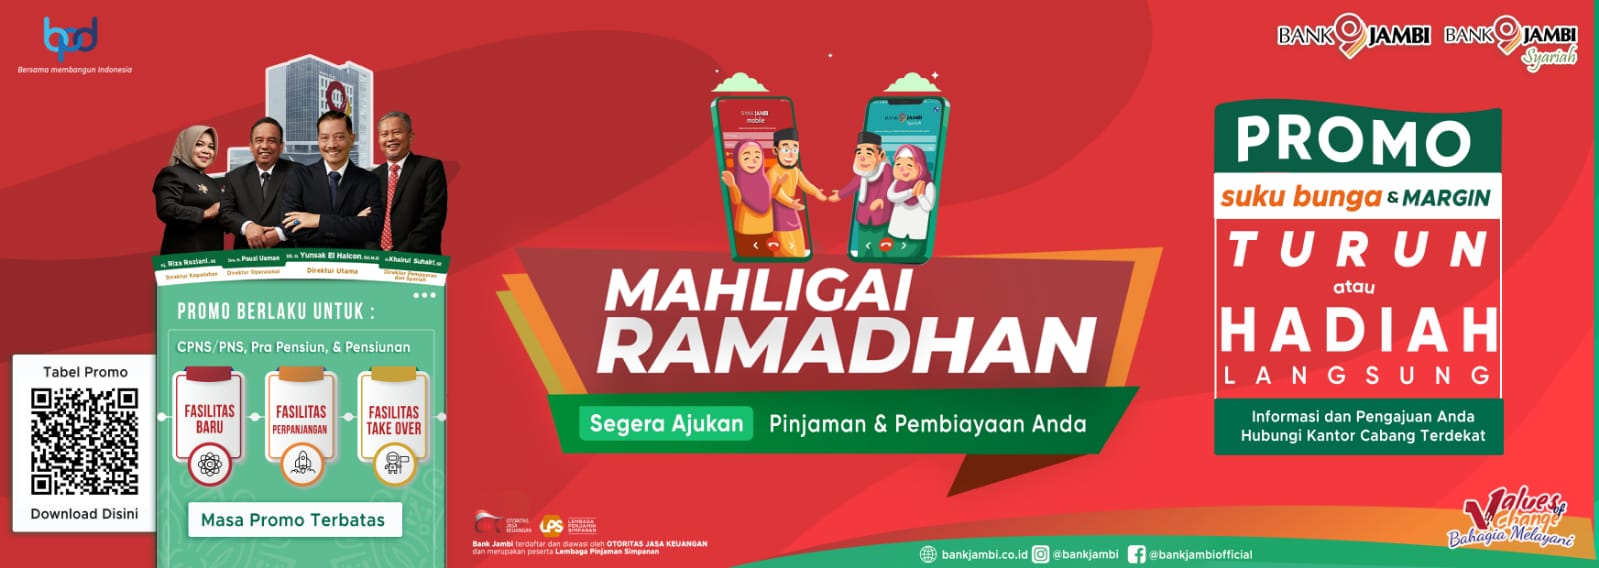 Poster Program dan Promo Mahligai Ramadhan Bank 9 Jambi